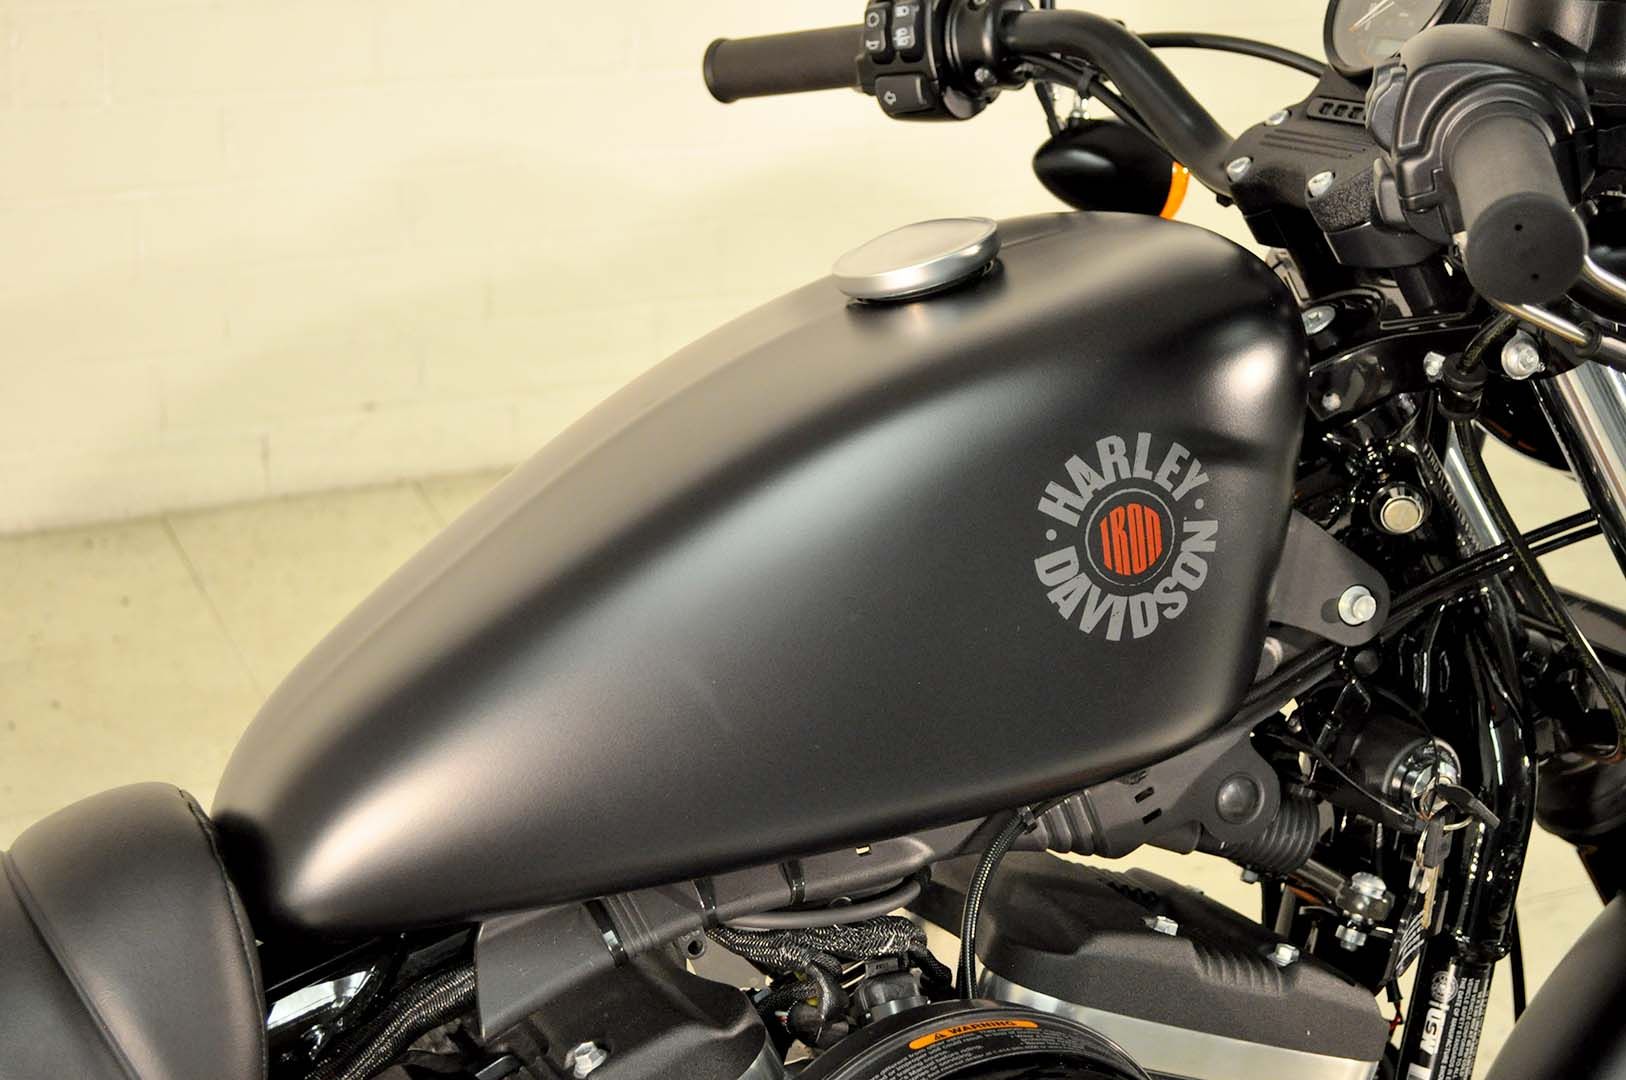 2020 Harley-Davidson Iron 883™ in Winston Salem, North Carolina - Photo 13